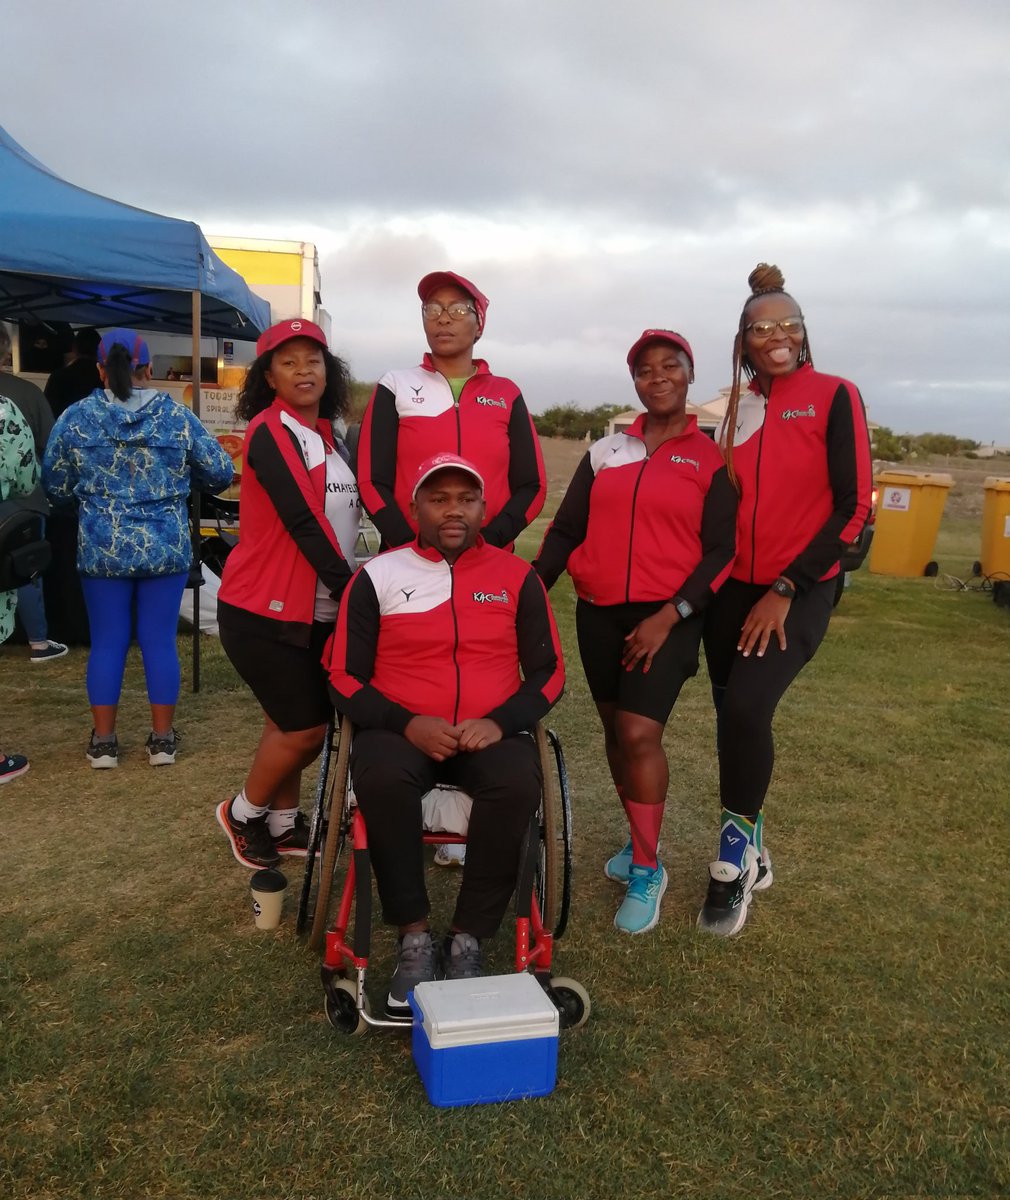 your number one supporter
🥳🥳

#WeskusMarathon
#NumberOneSupporter
#RunnersDiaries
#RunningBuddies
#teamKAC
#KhayelitshaAC